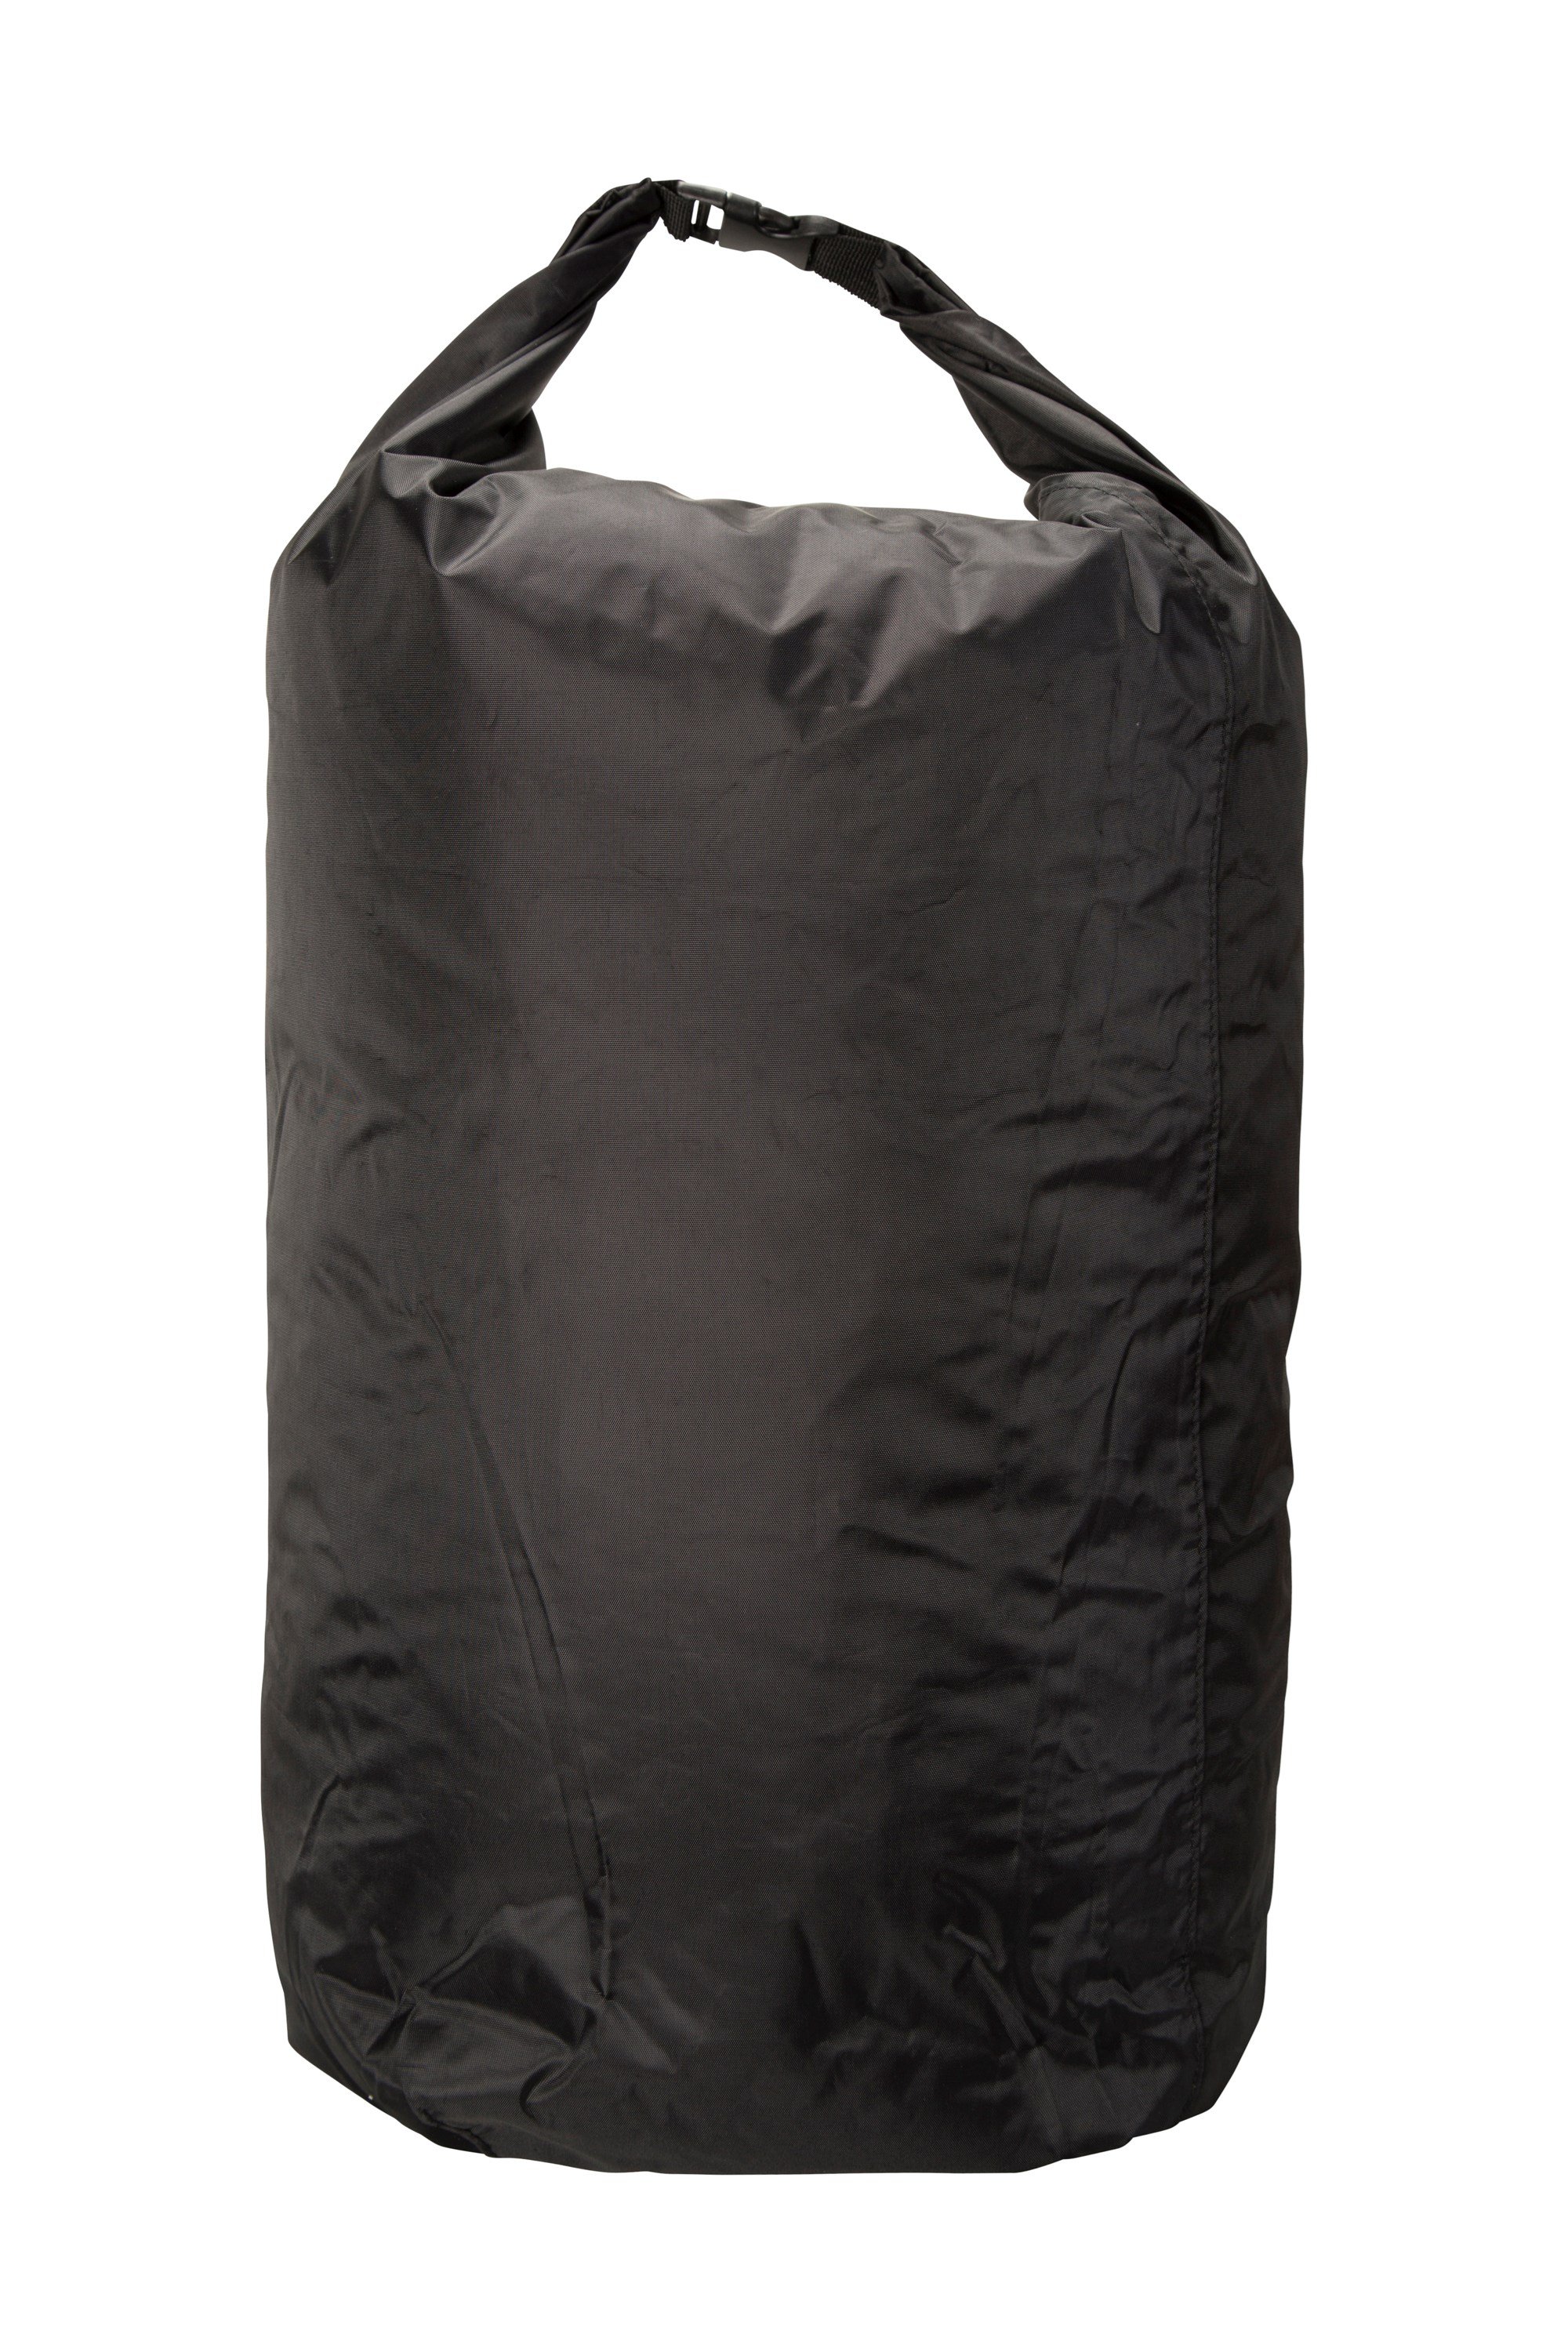 Dry Pack Liner - Medium 40l - Black